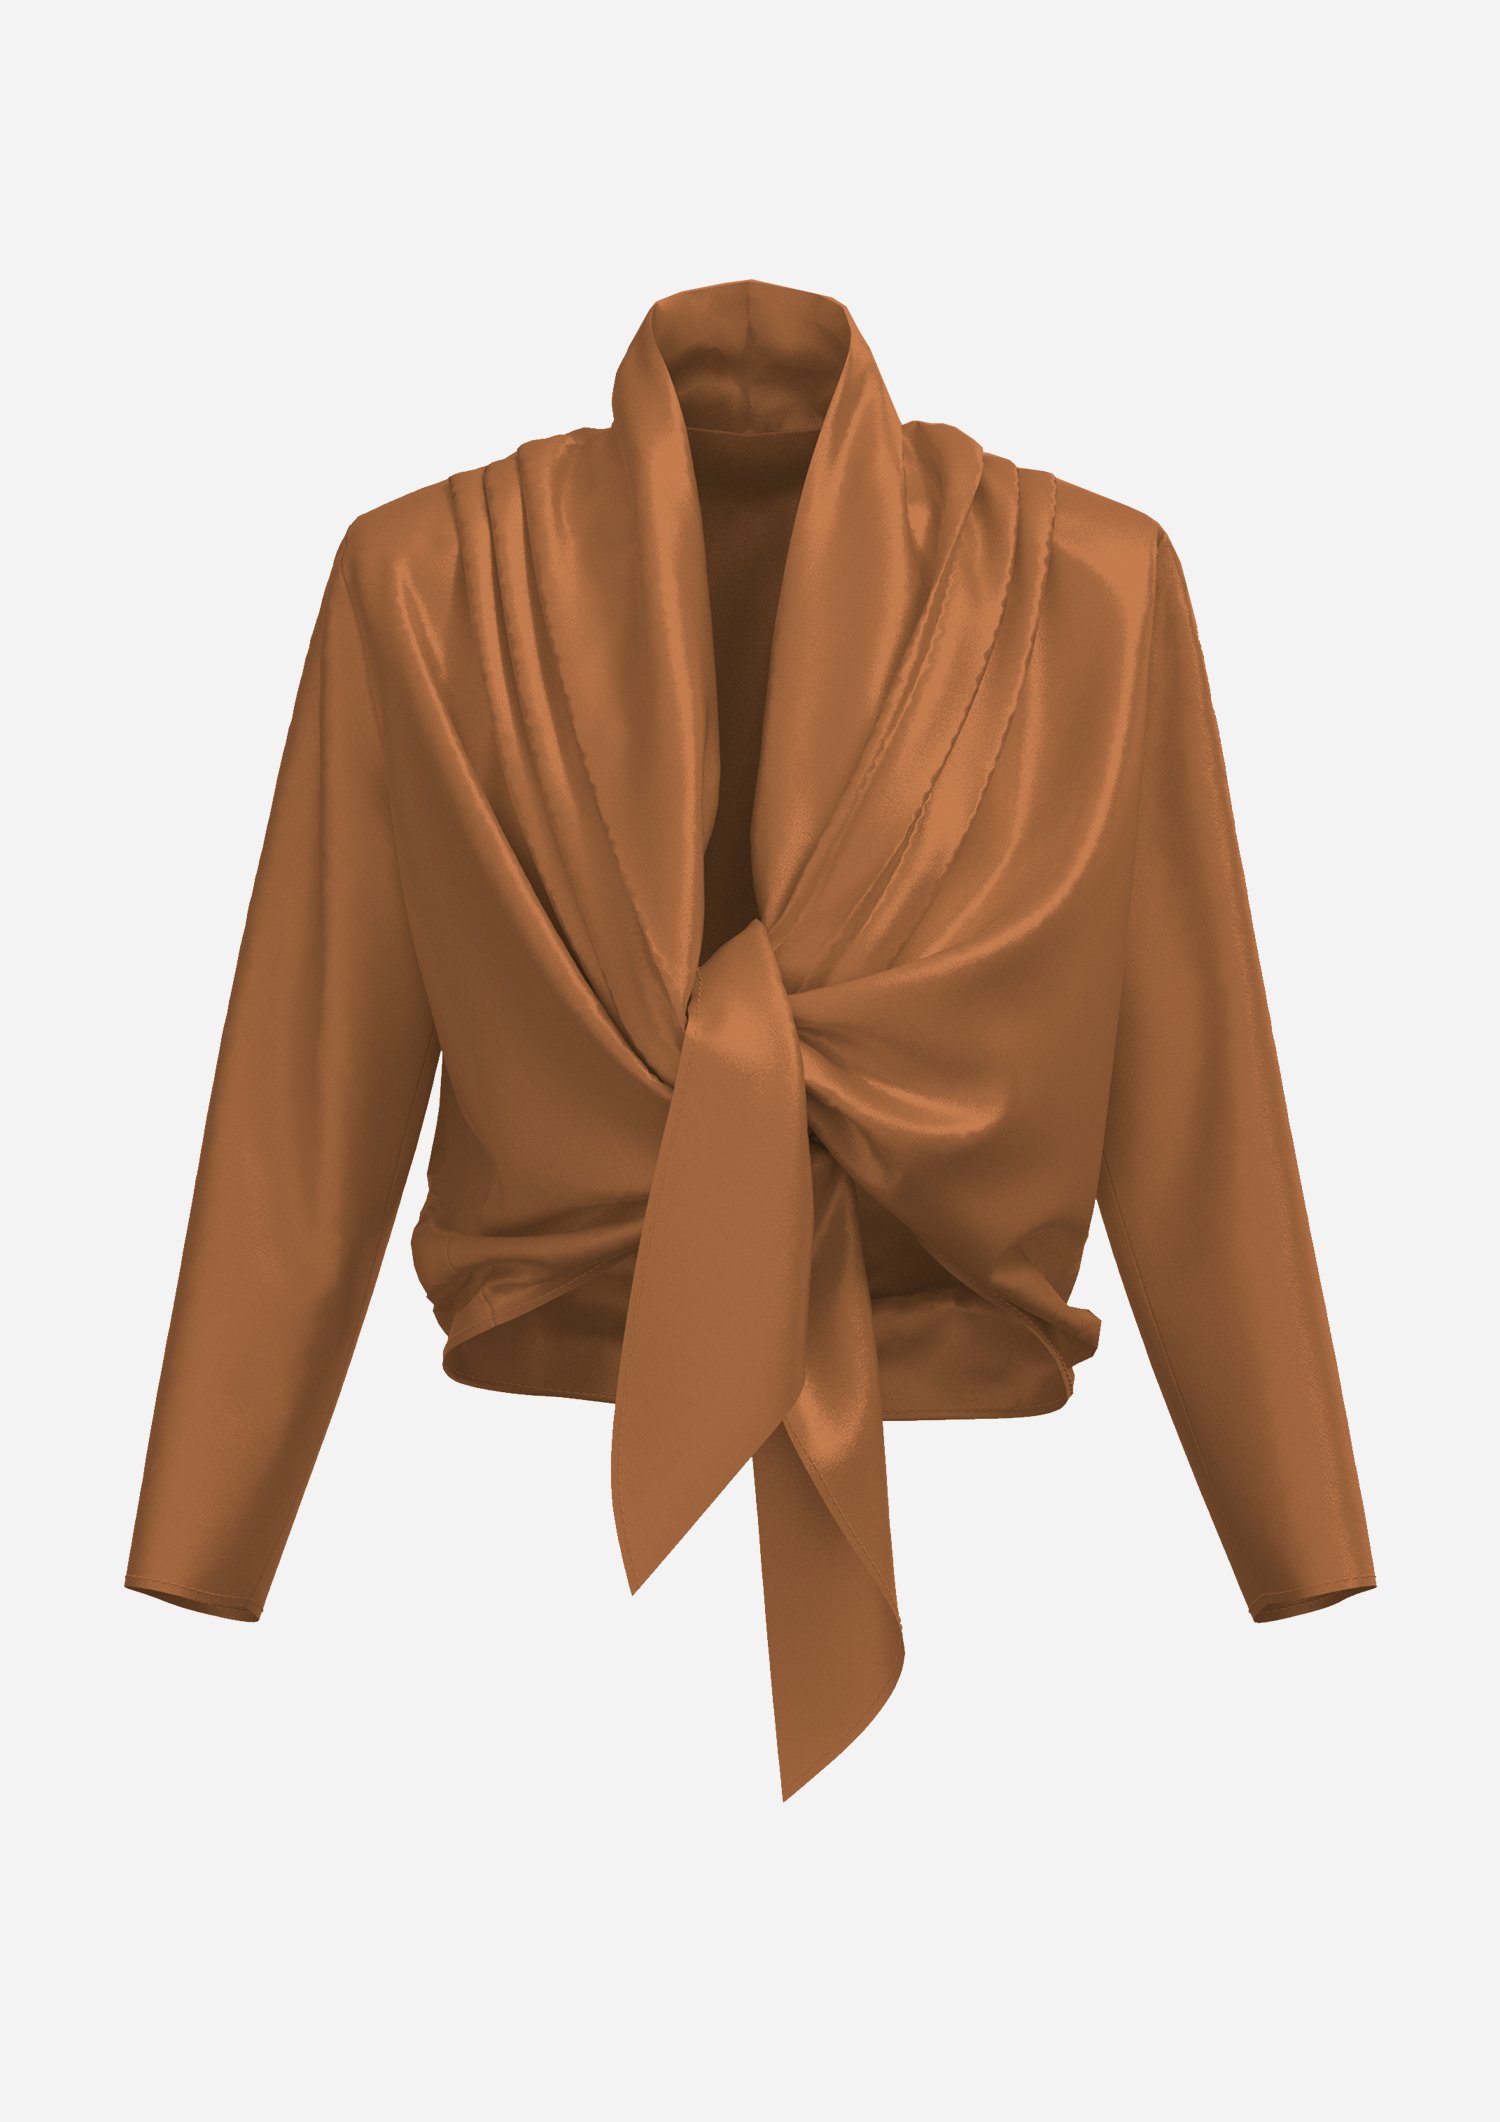 Wrap blouse in bronze